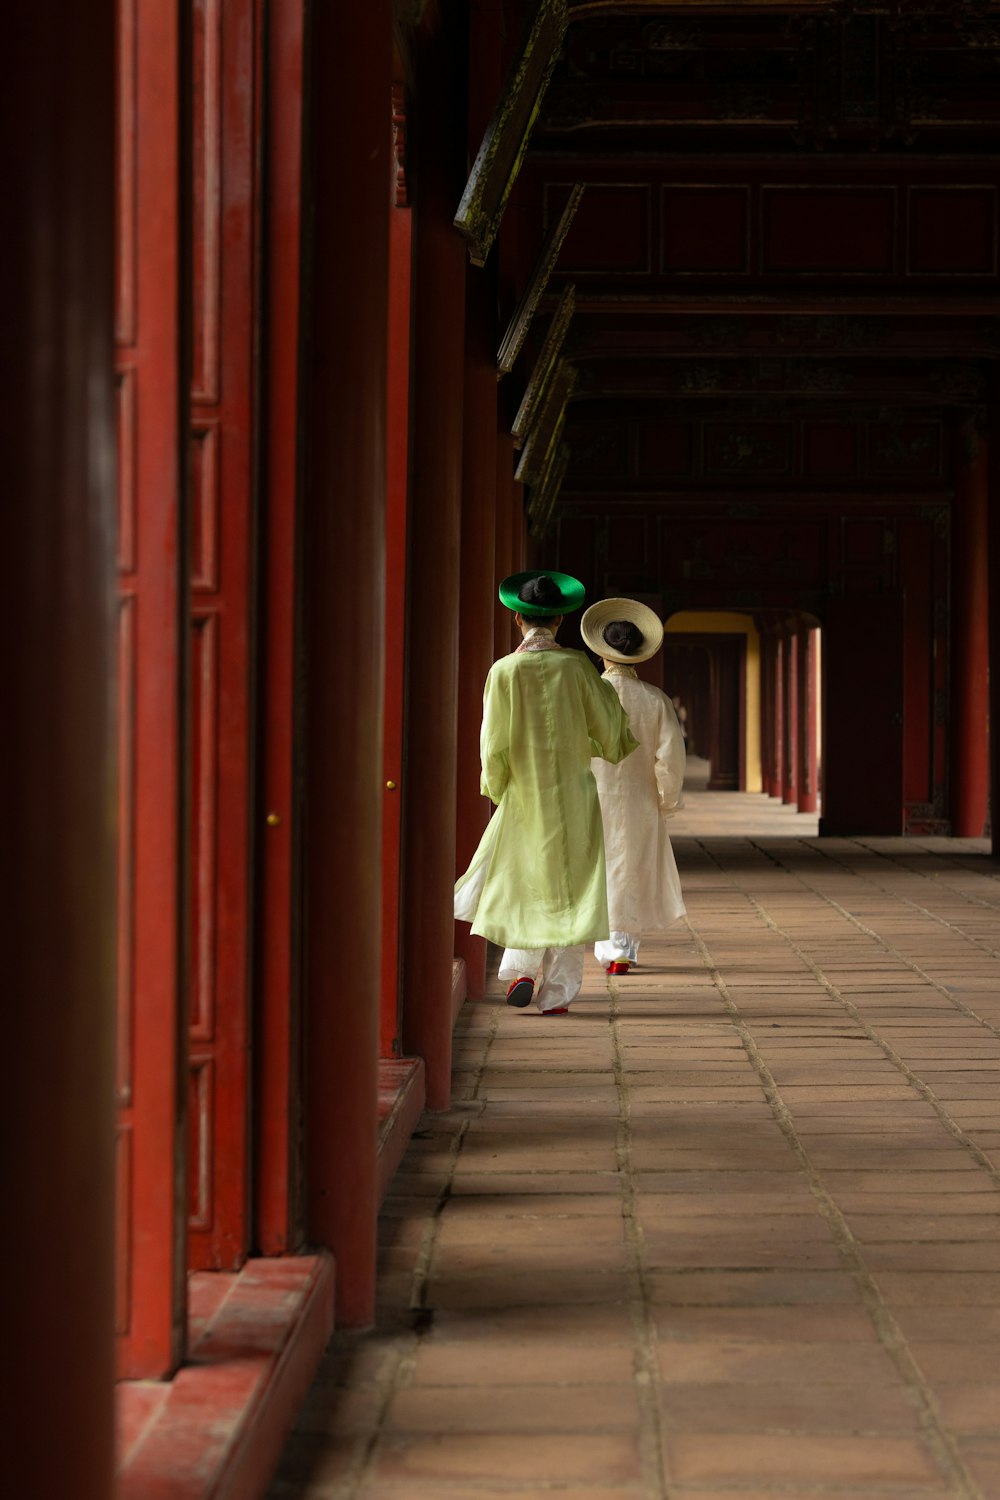 two young girls are walking down a long corridor